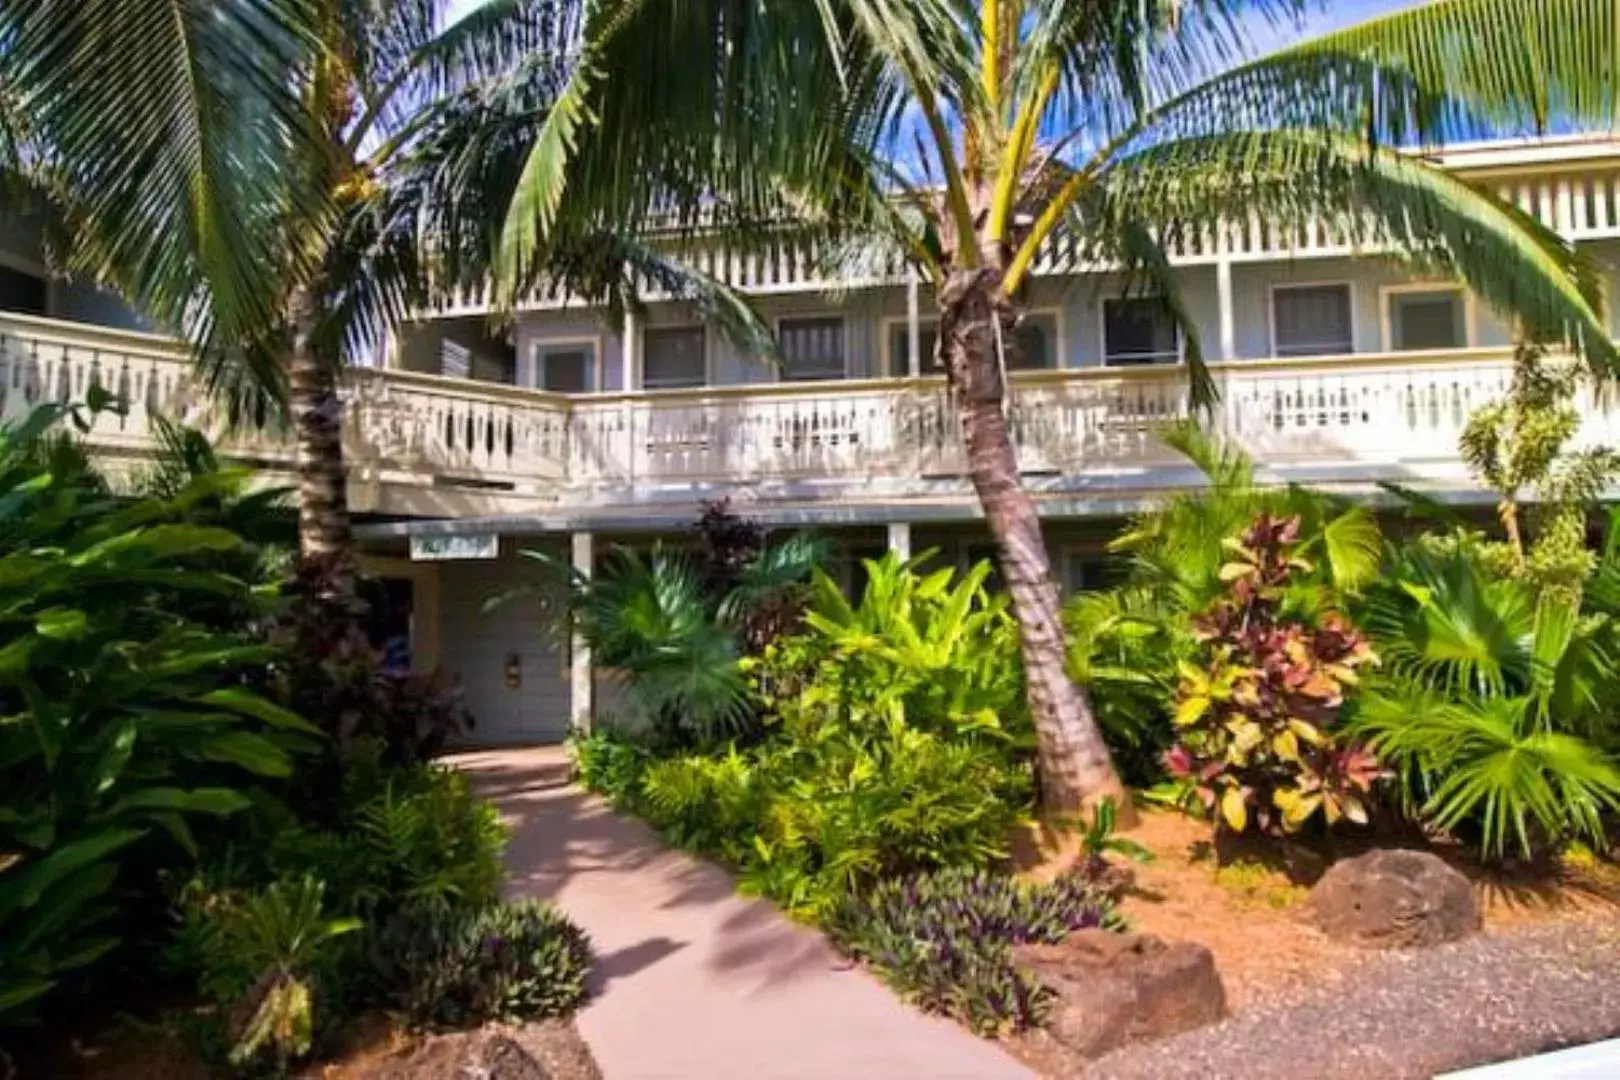 Property building in Kauai Palms Hotel